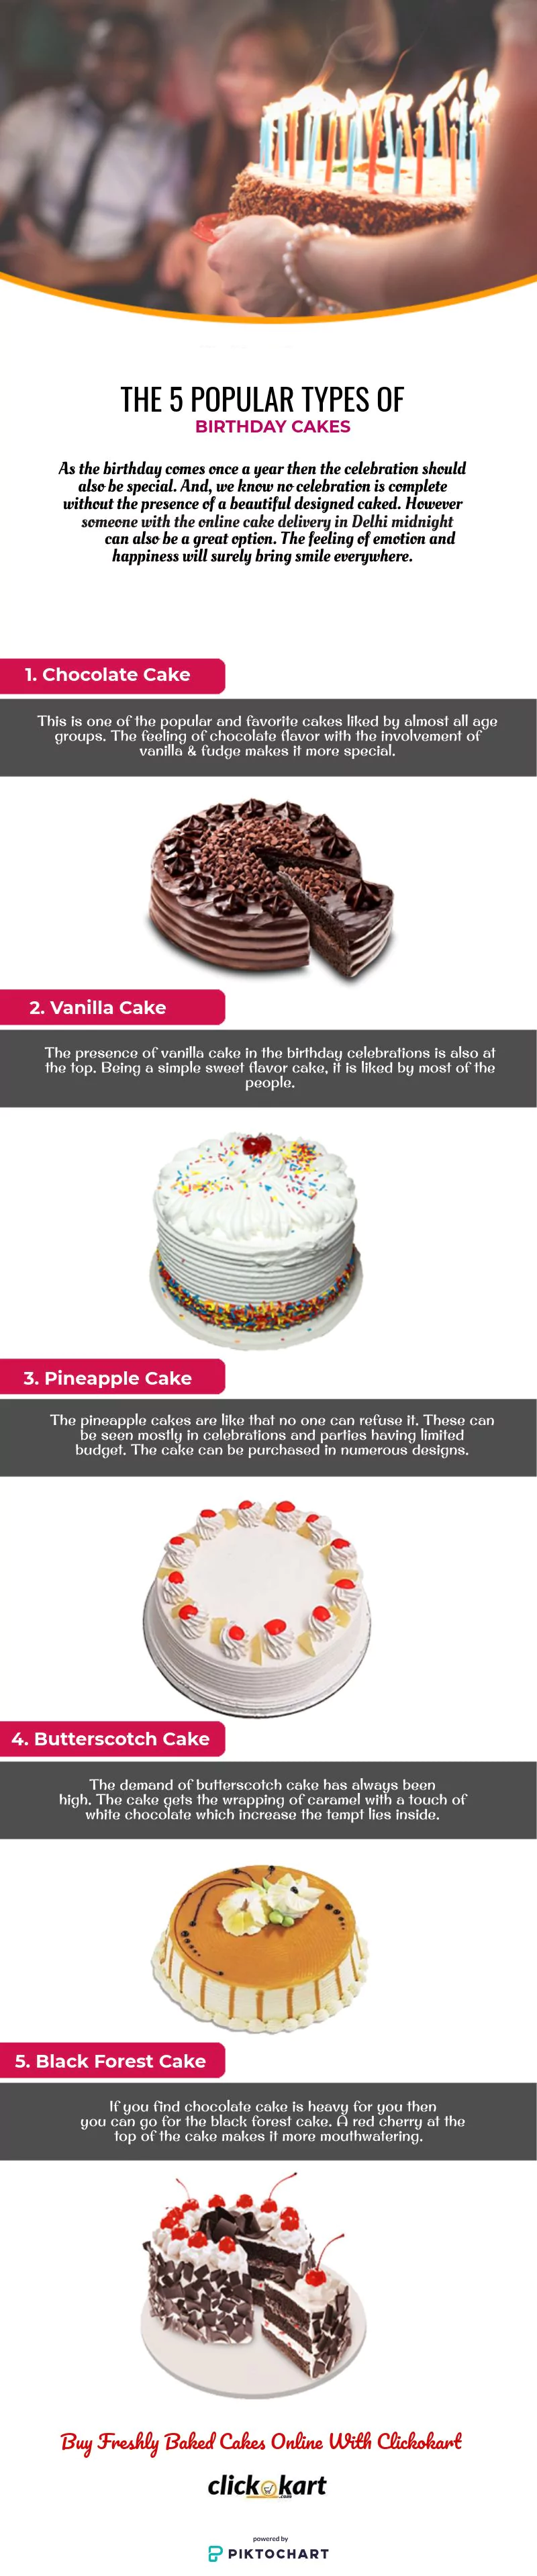 The 5 Popular Types of Birthday Cakes